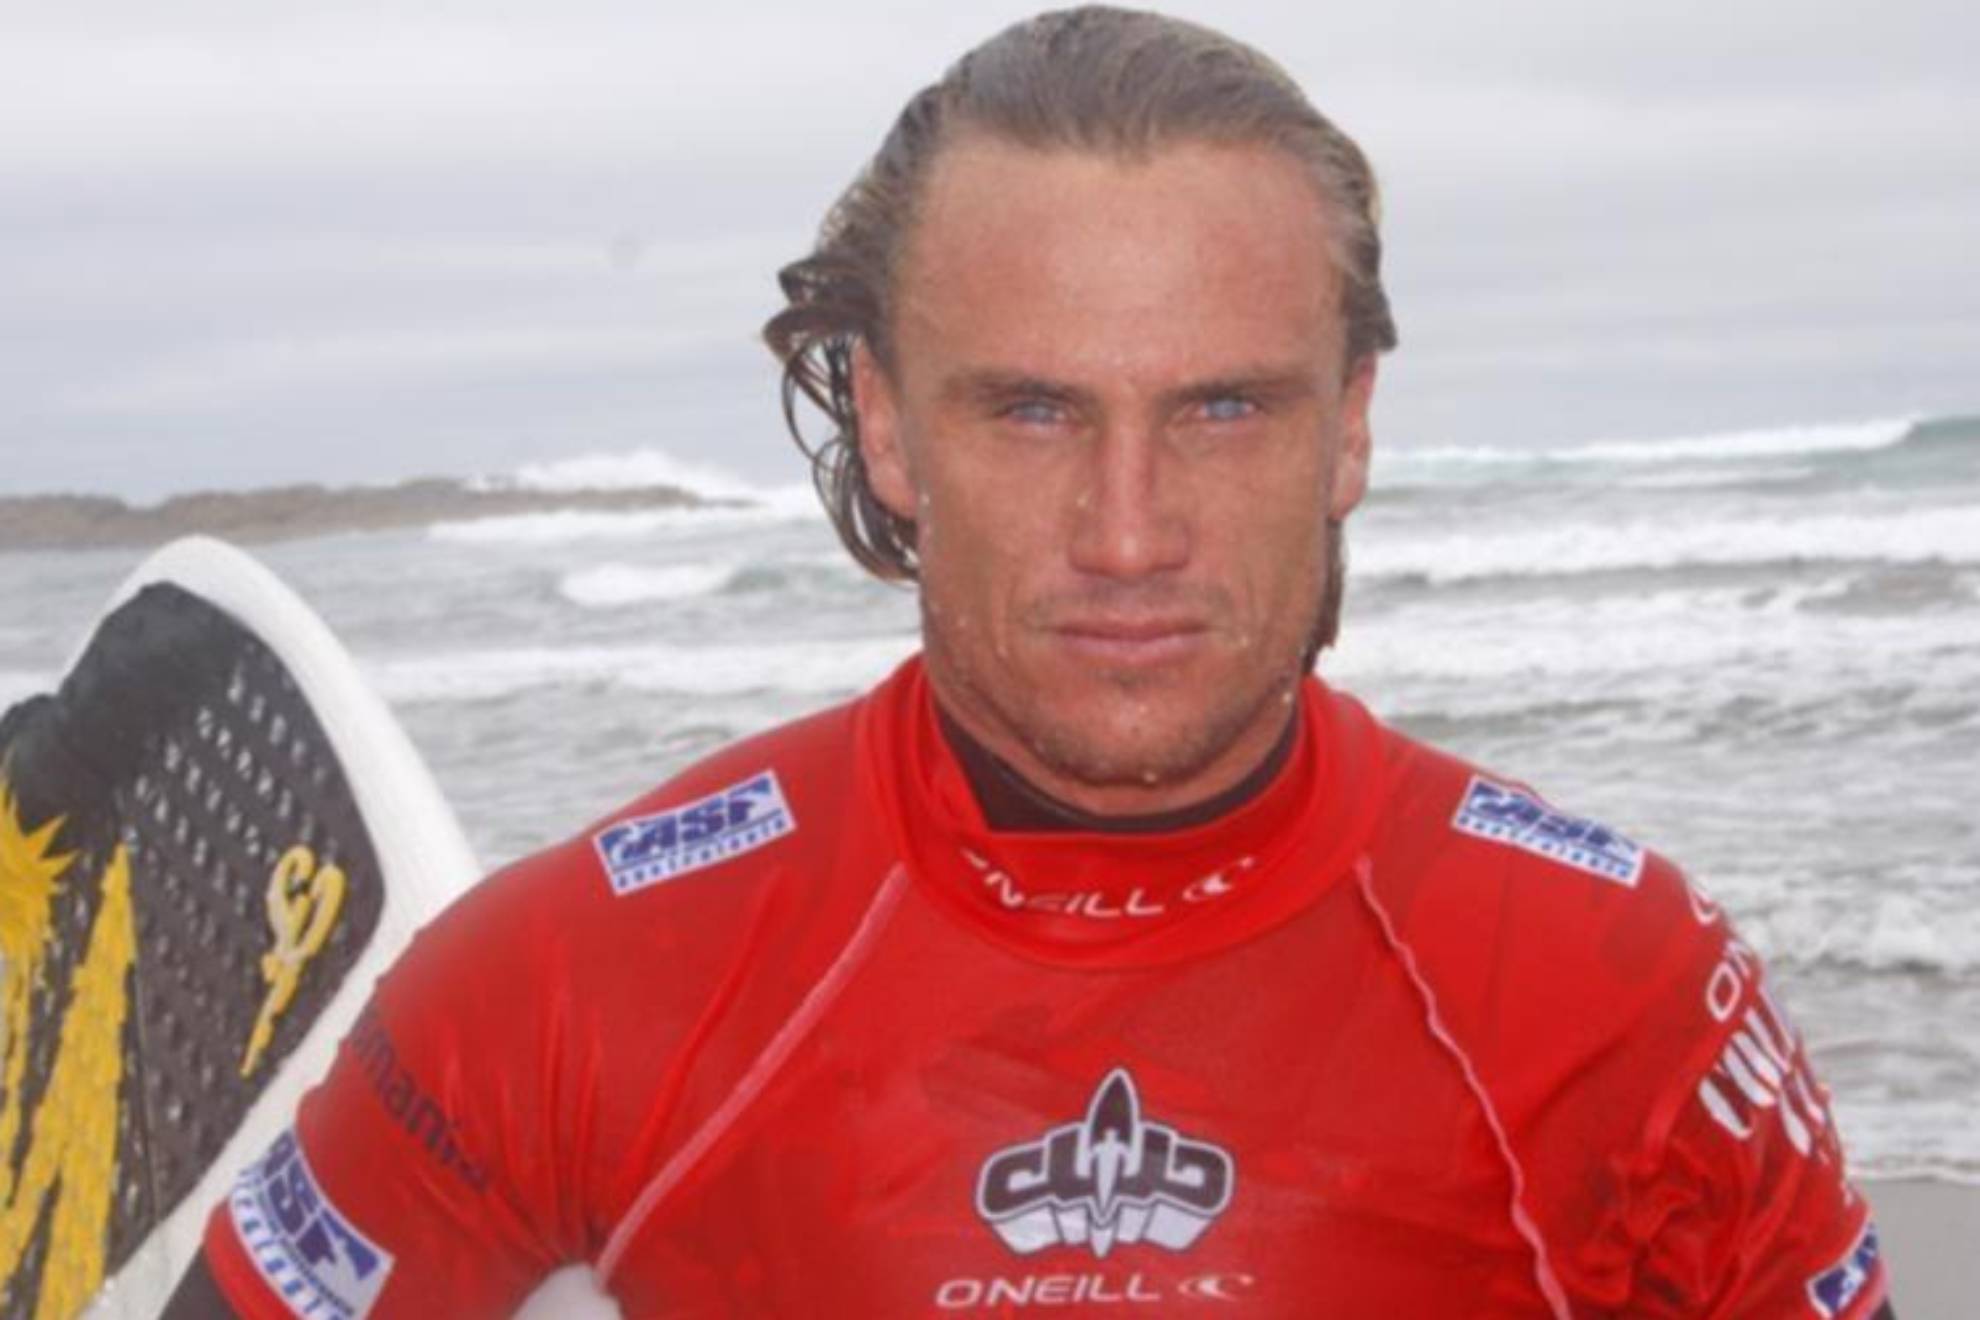 Muere de un puñetazo la leyenda del surf que ganó a Kelly Slater